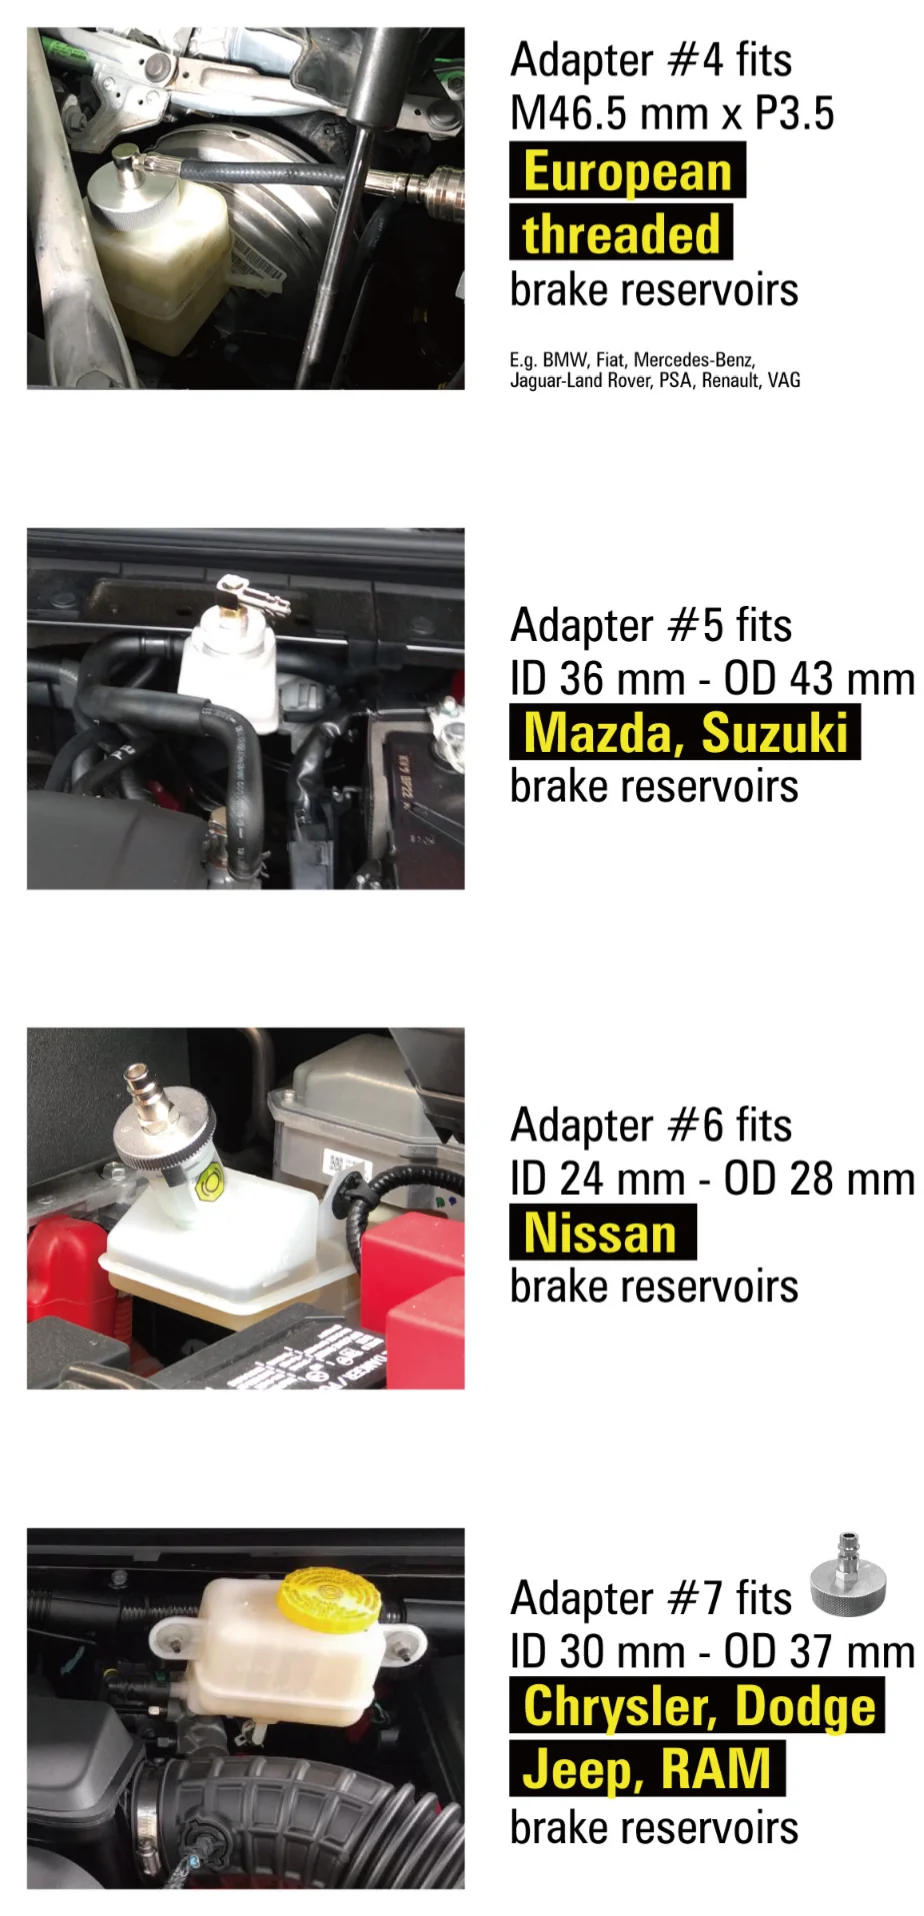 brake pressure bleeder master cylinder adapters